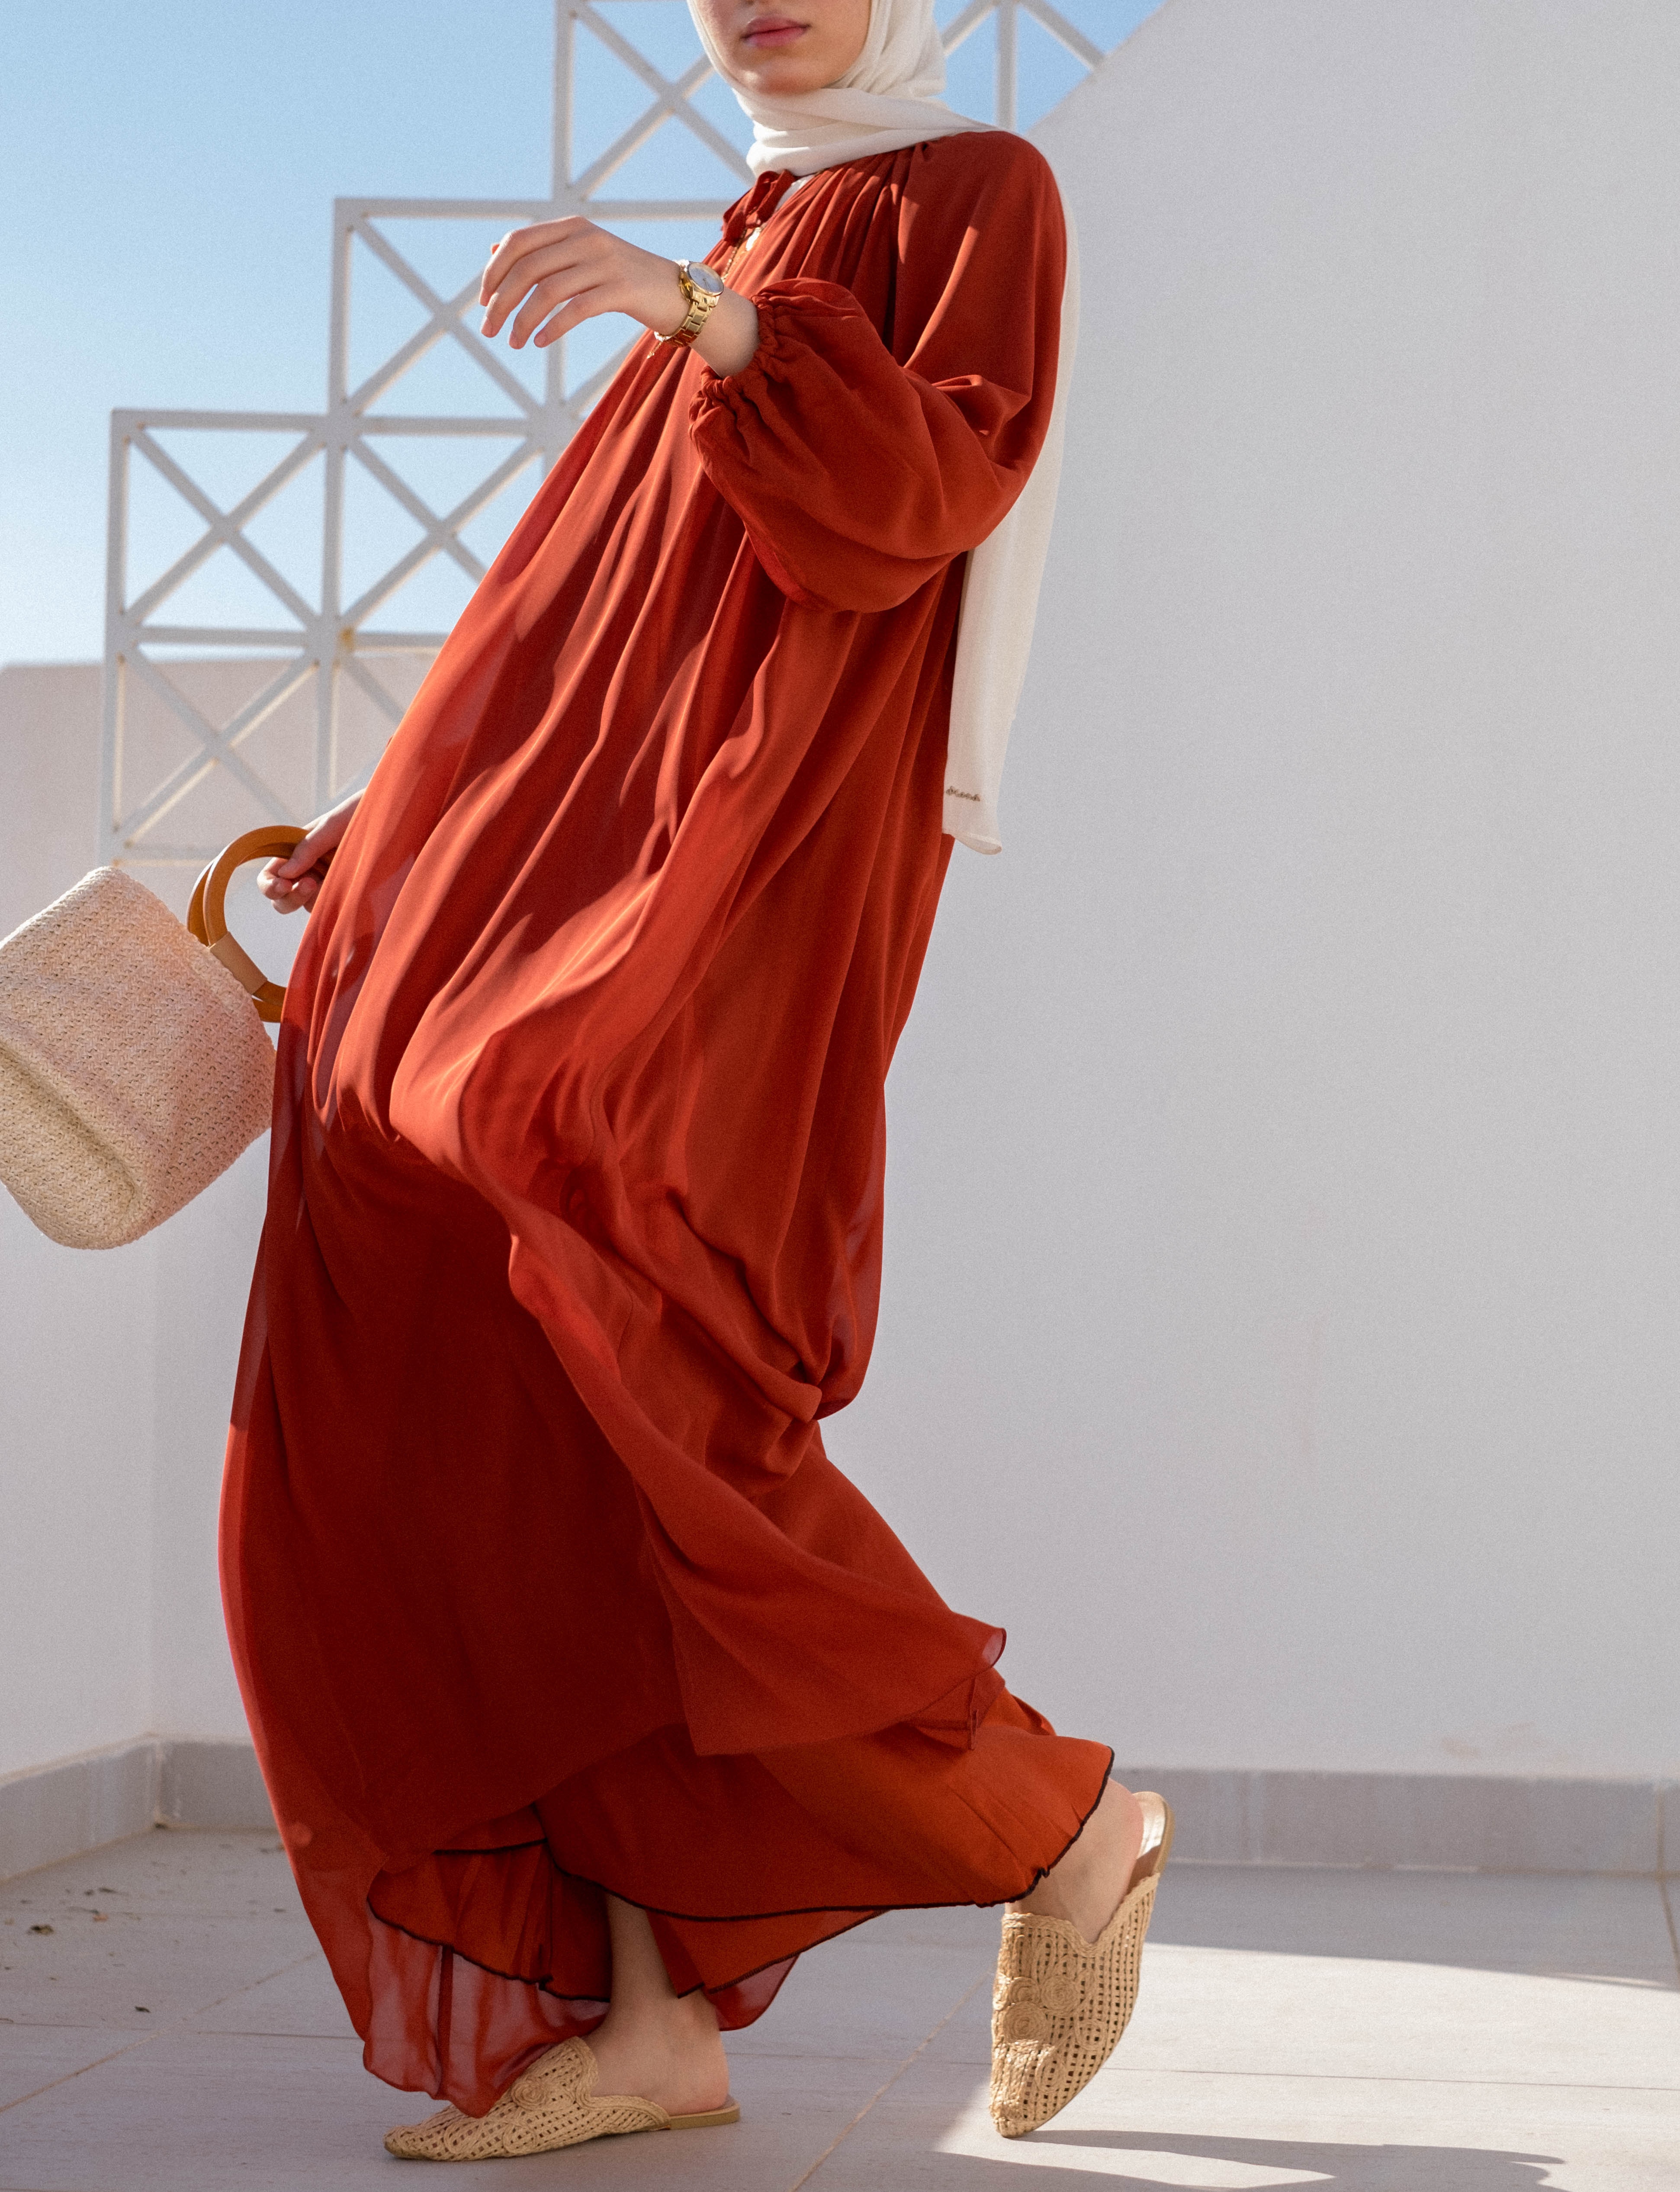 Orange dress (Sumber gambar: Reham Youssef/Unsplash)